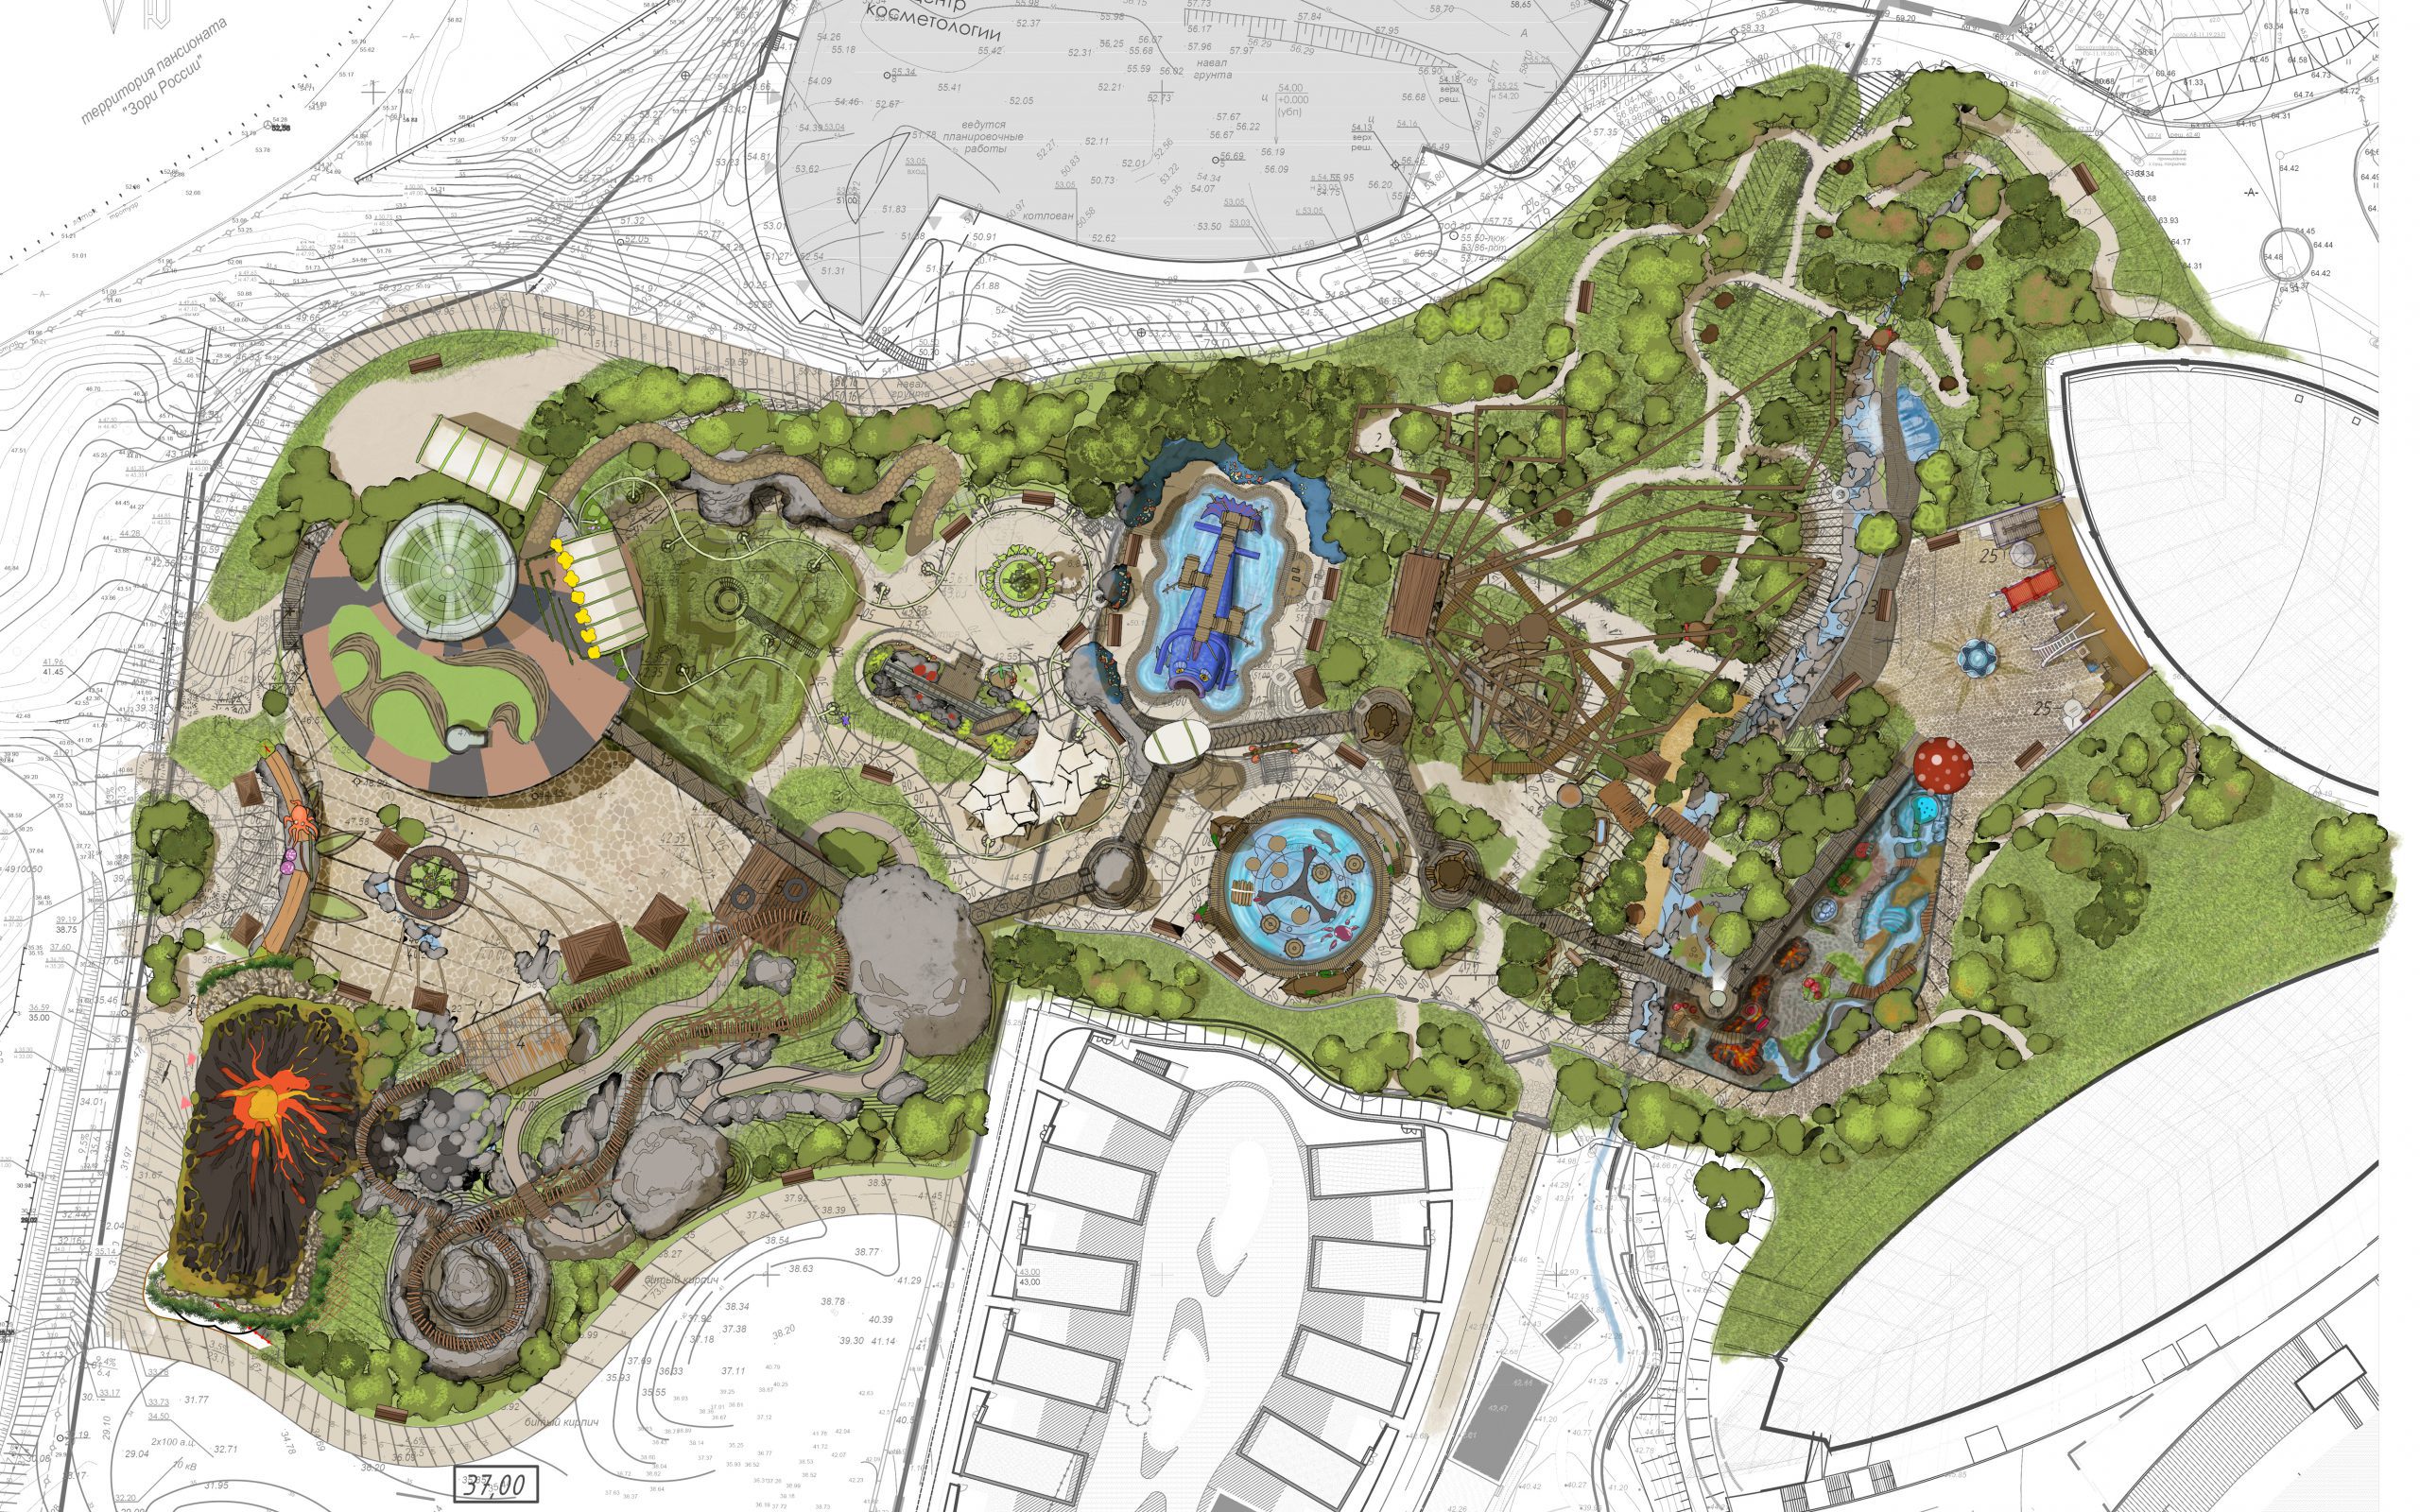 Theme Park concept drawing